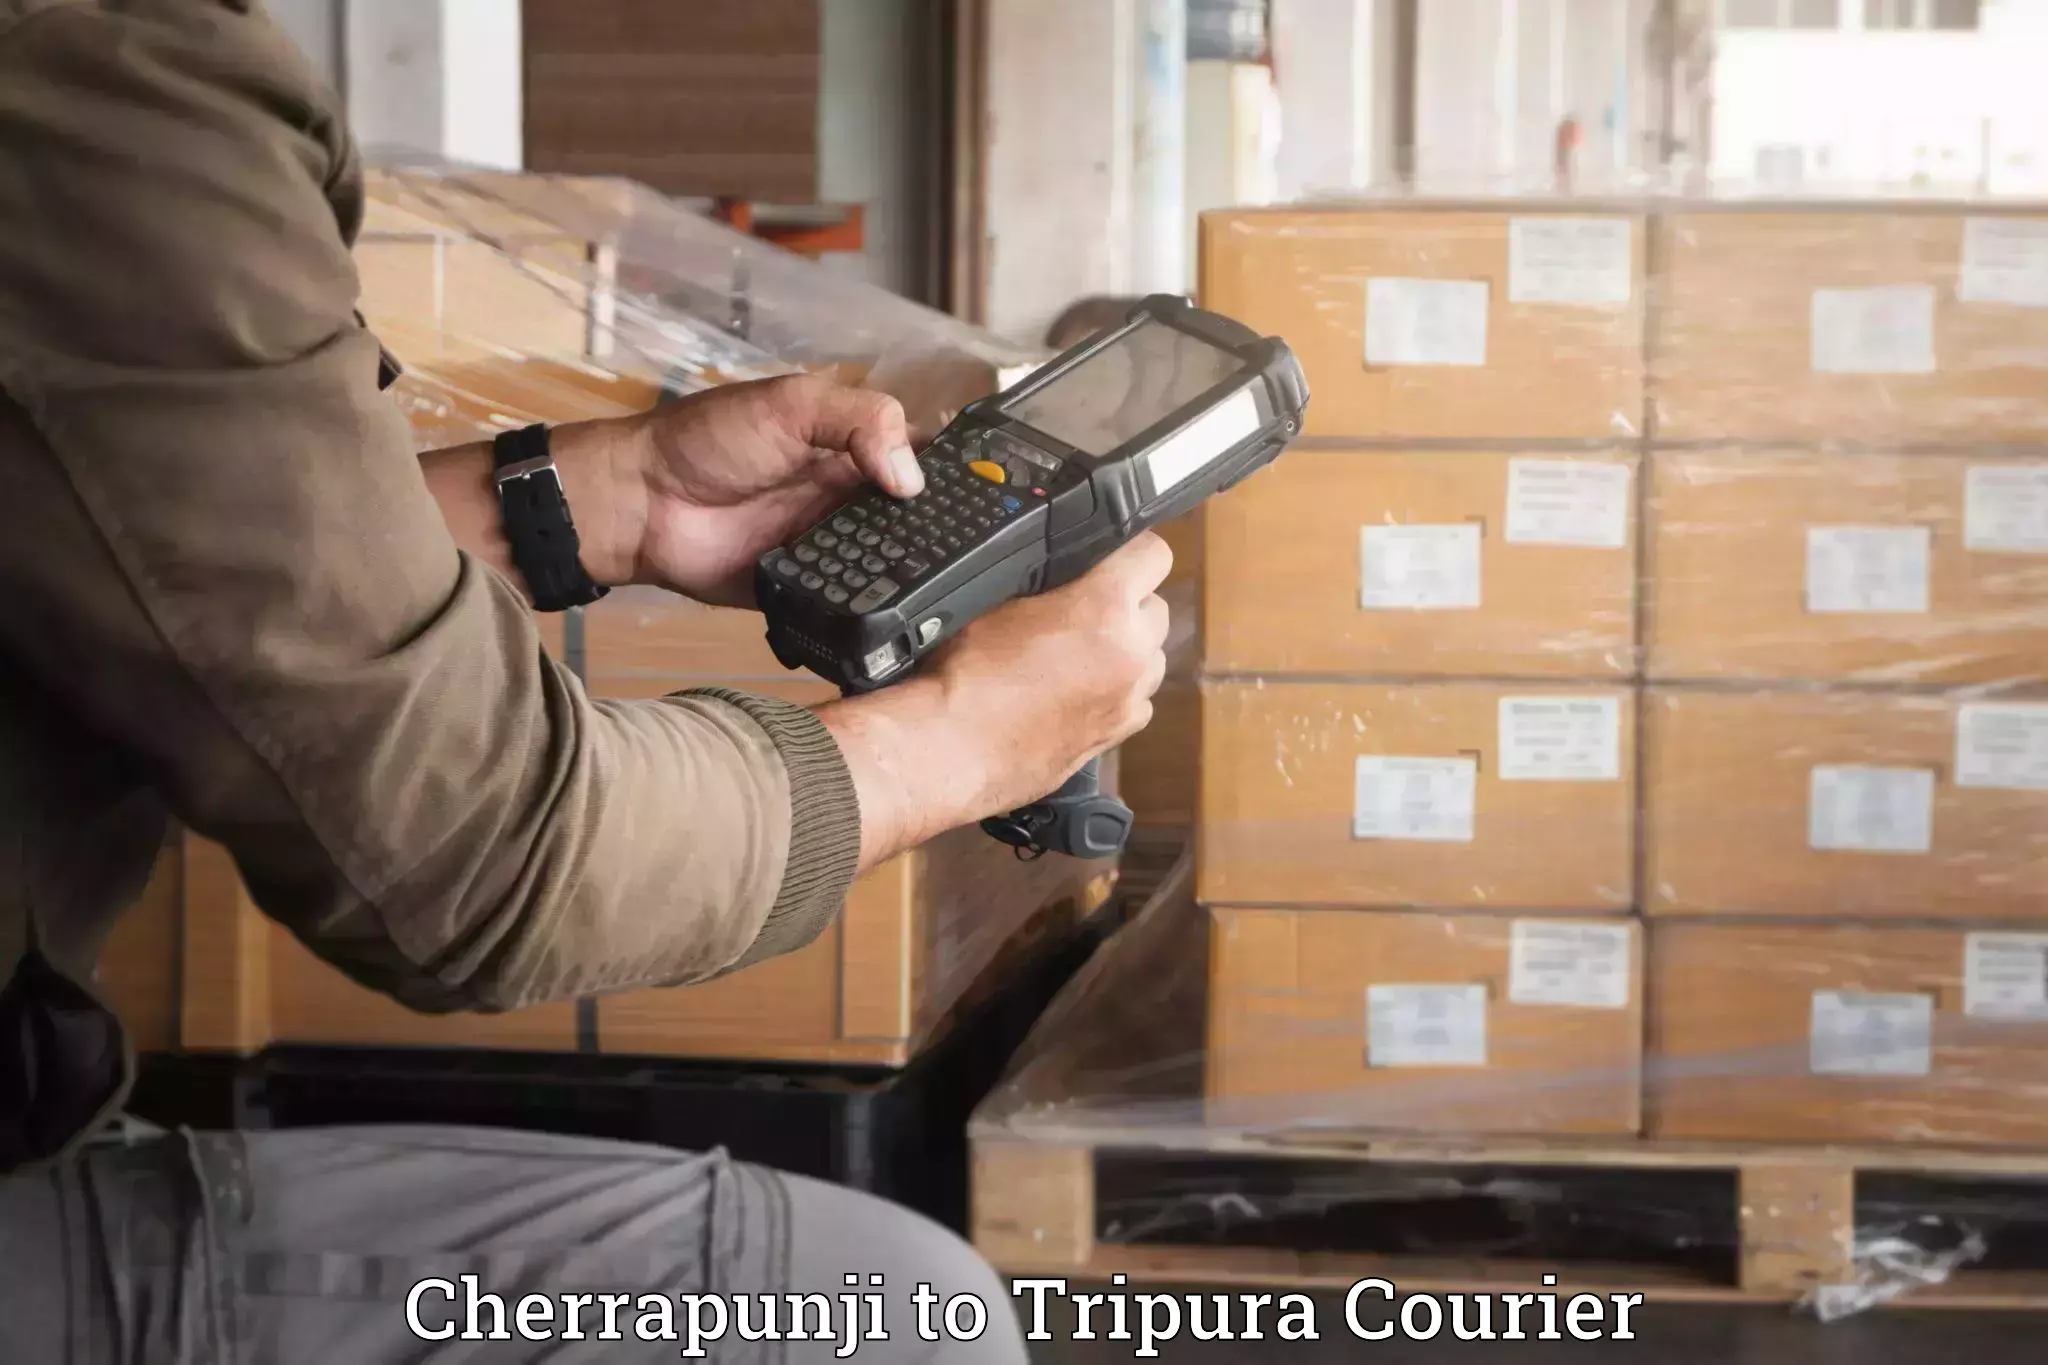 Premium luggage delivery Cherrapunji to Udaipur Tripura